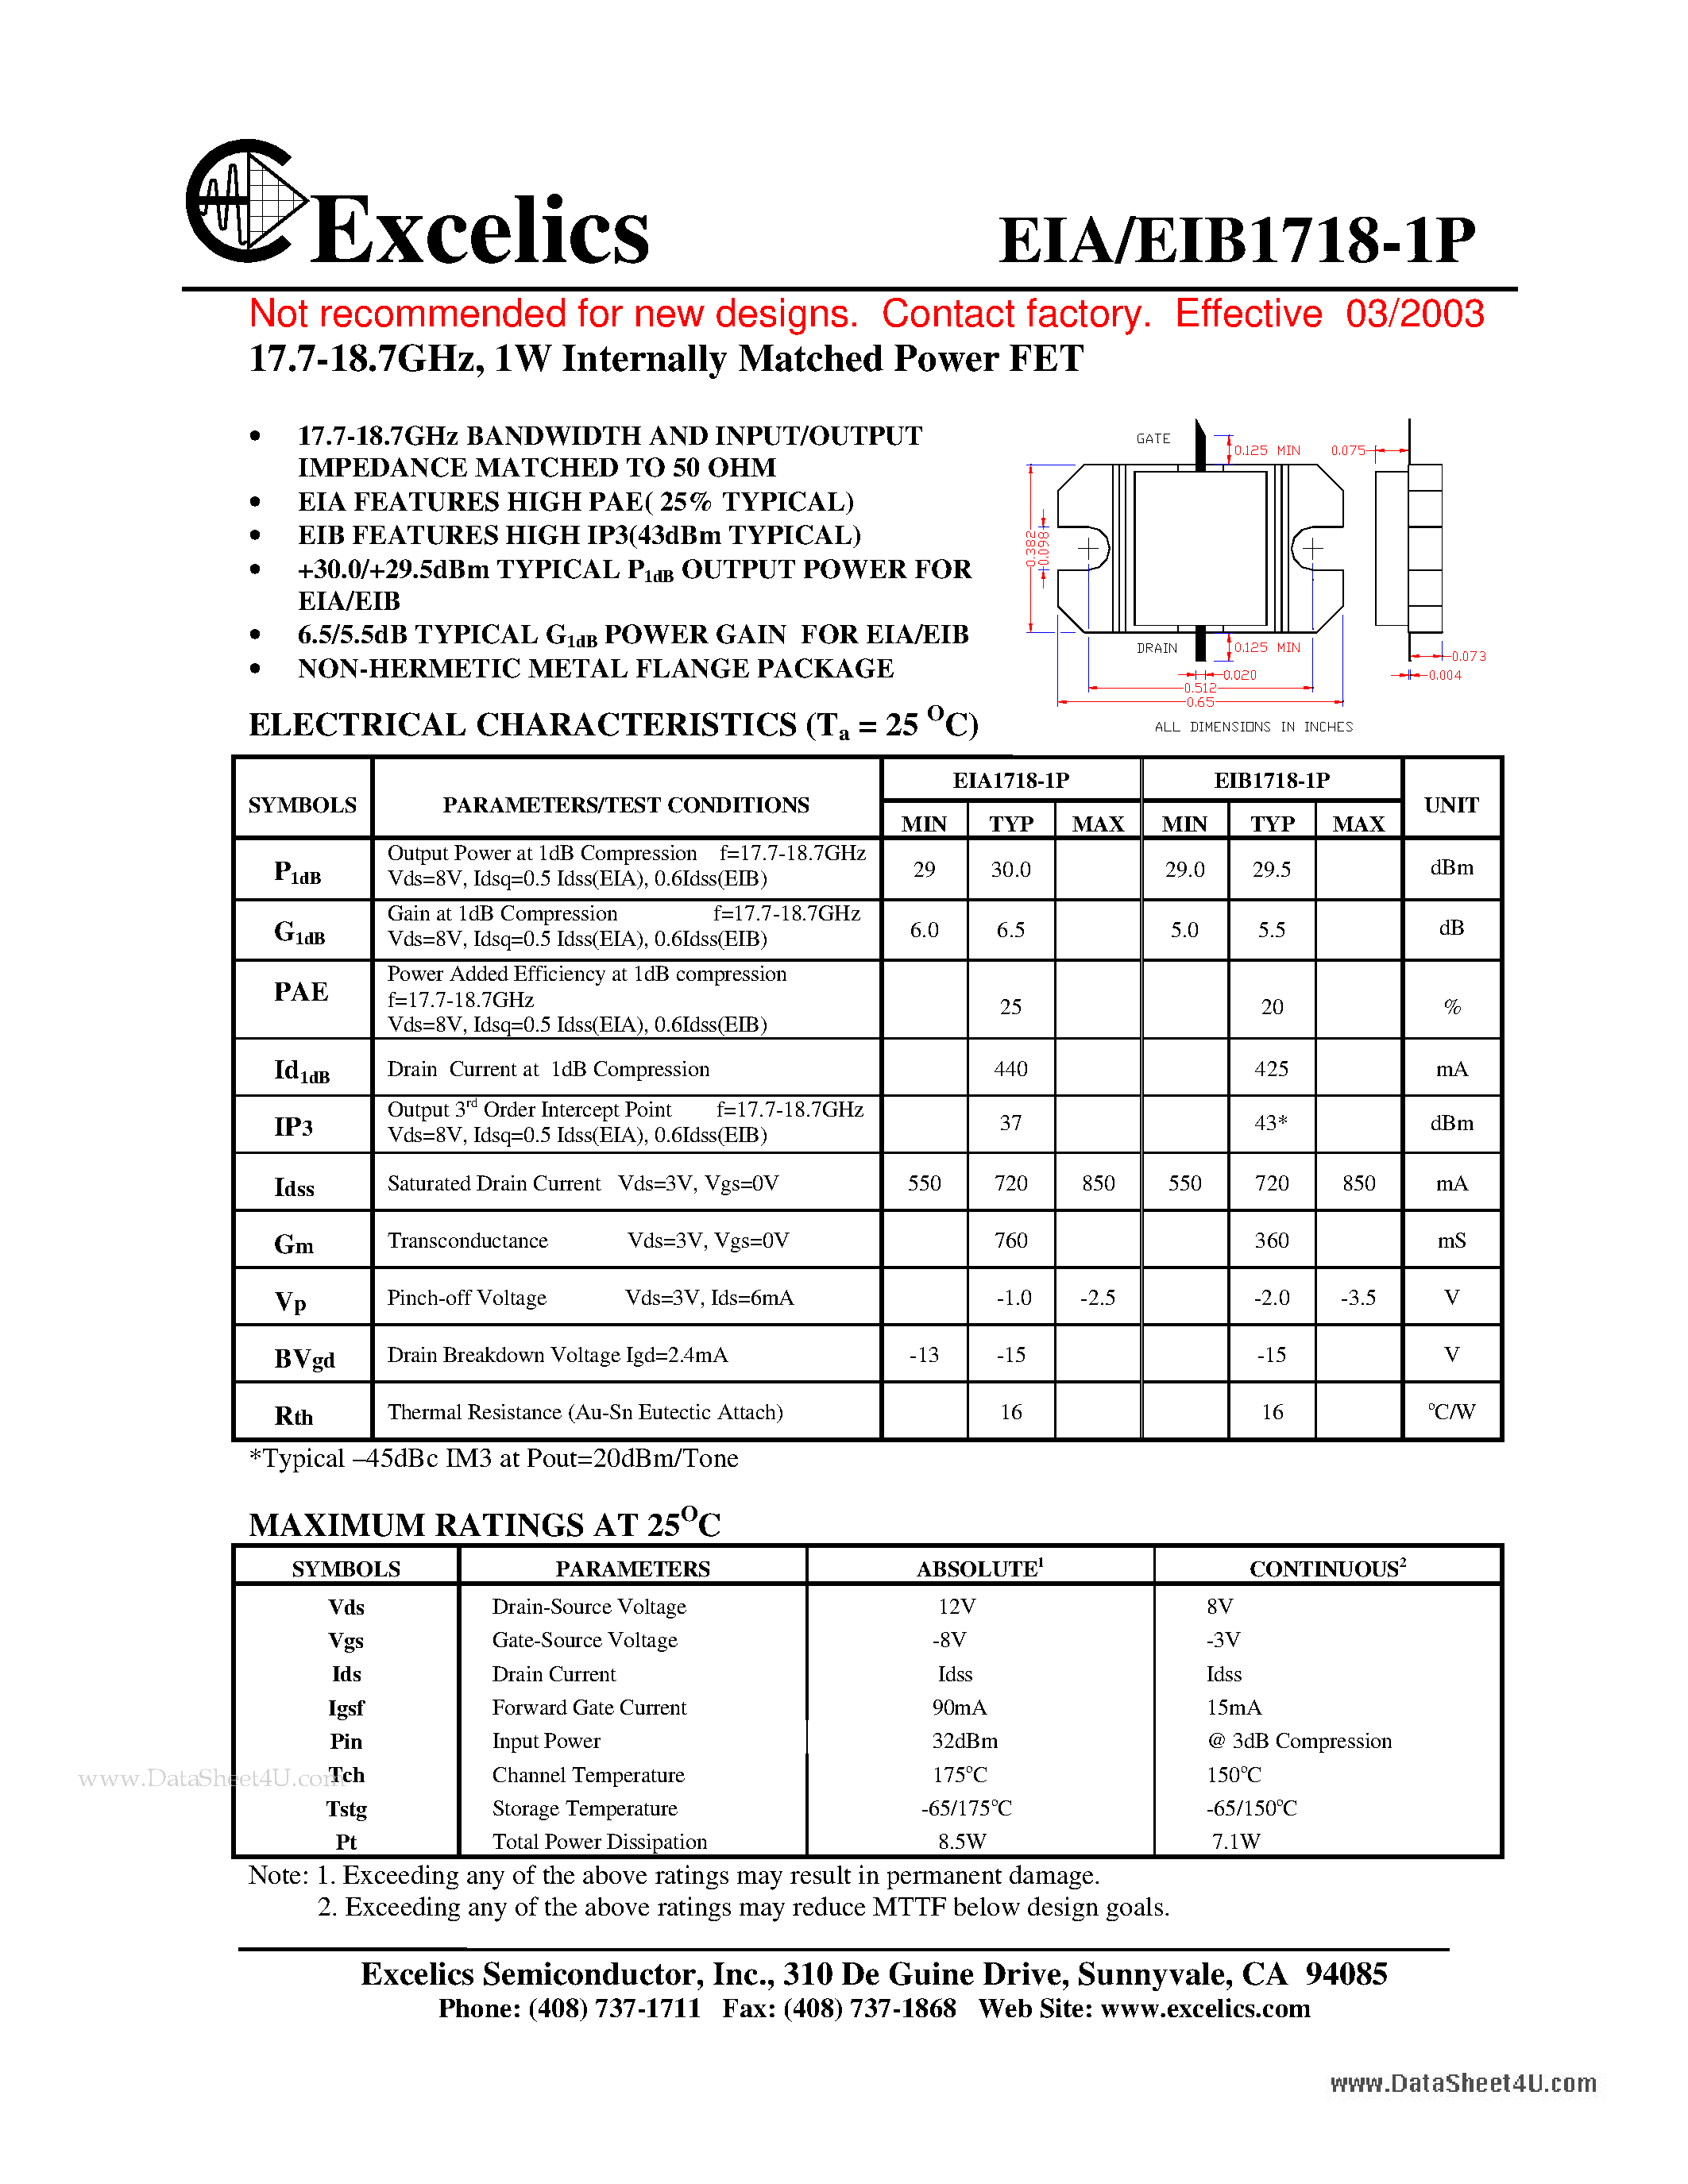 Даташит EIA1718-1P - 17.7-18.7GHz 1W Internally Matched Power FET страница 1